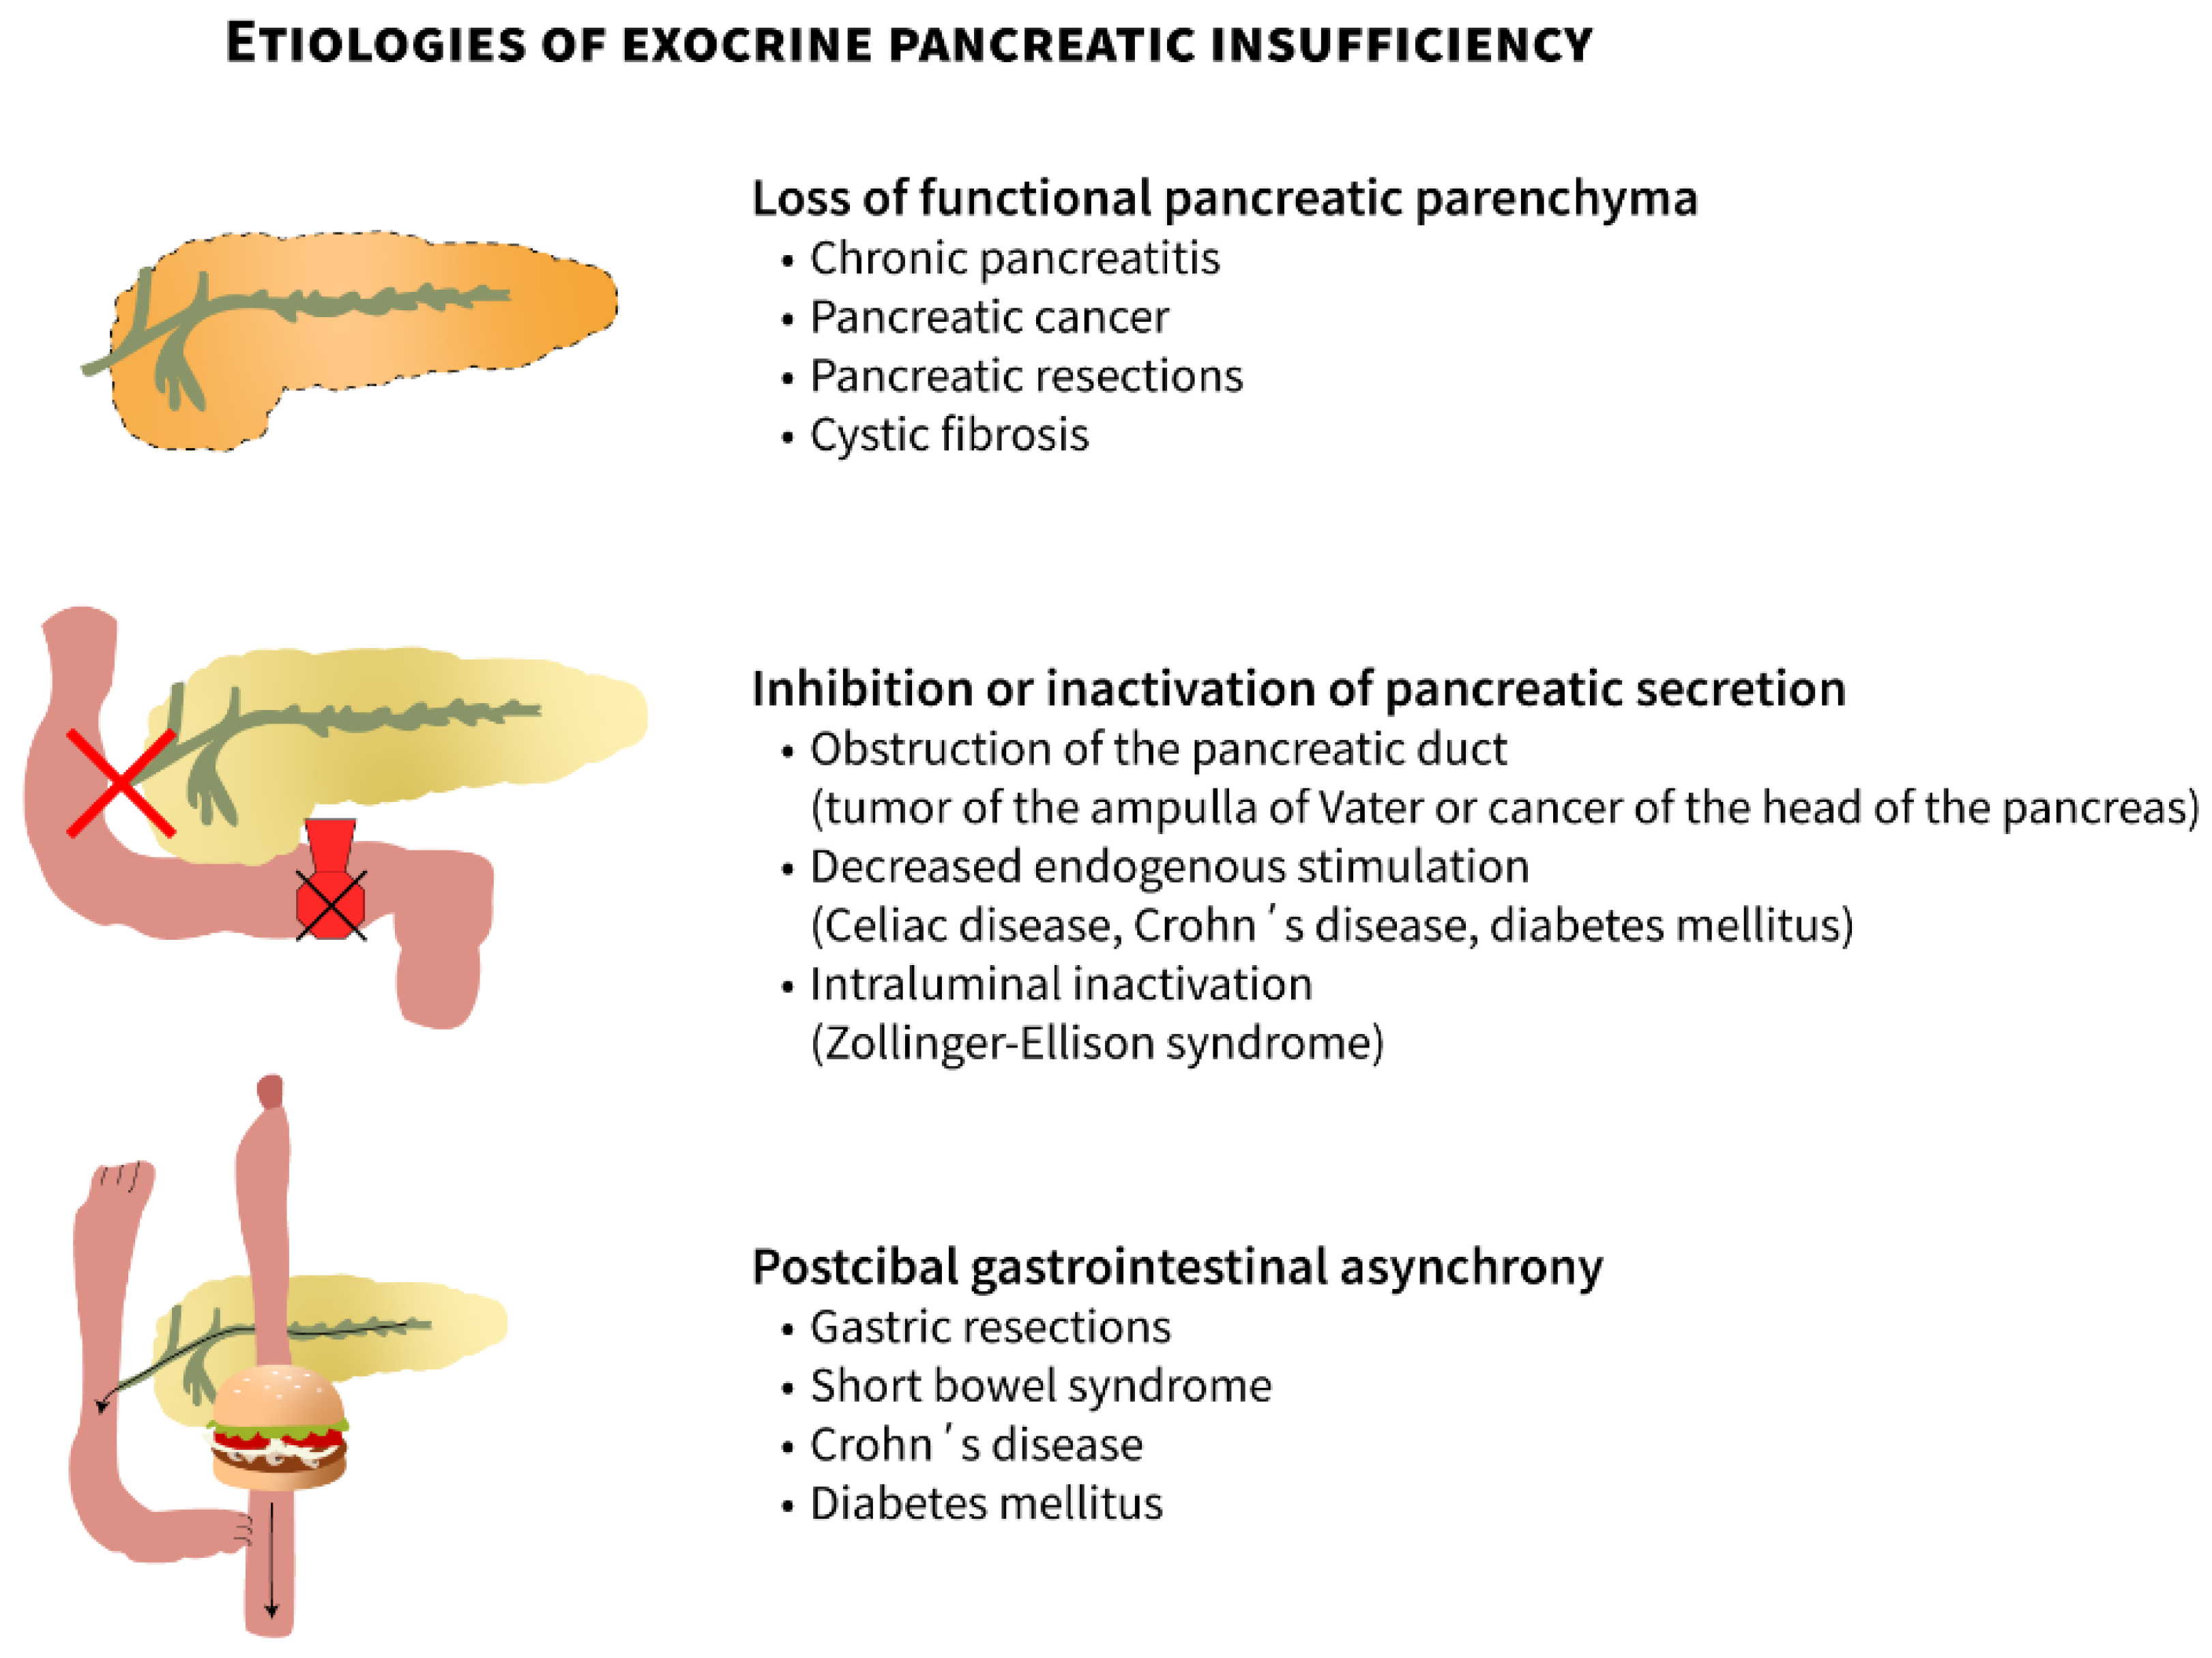 Pancreatic exocrine insufficiency